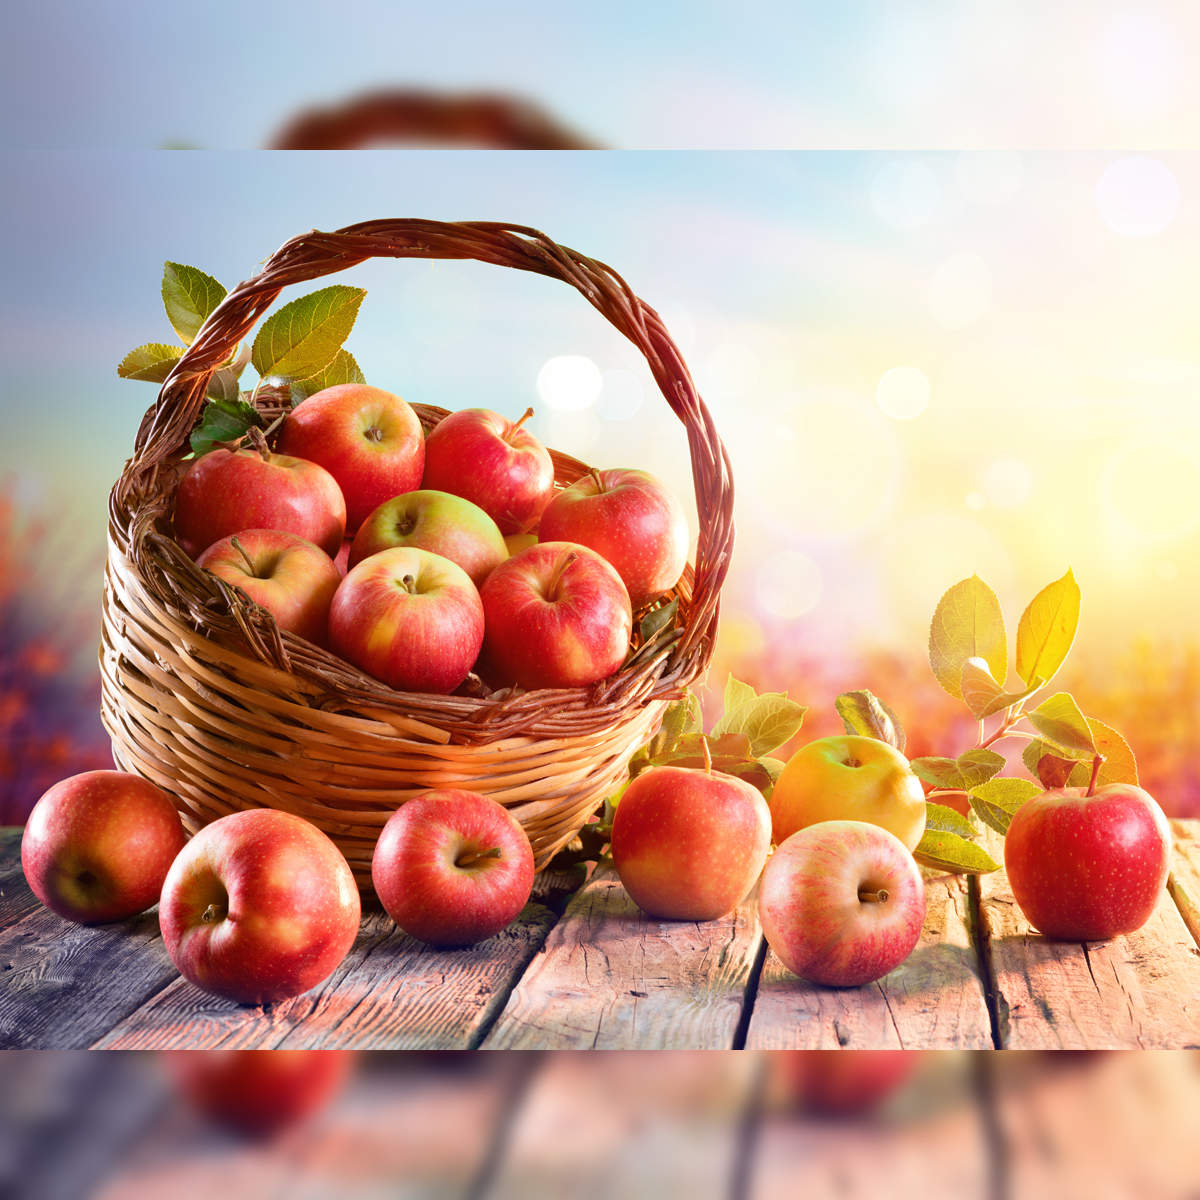 Should I Buy Organic Apples?